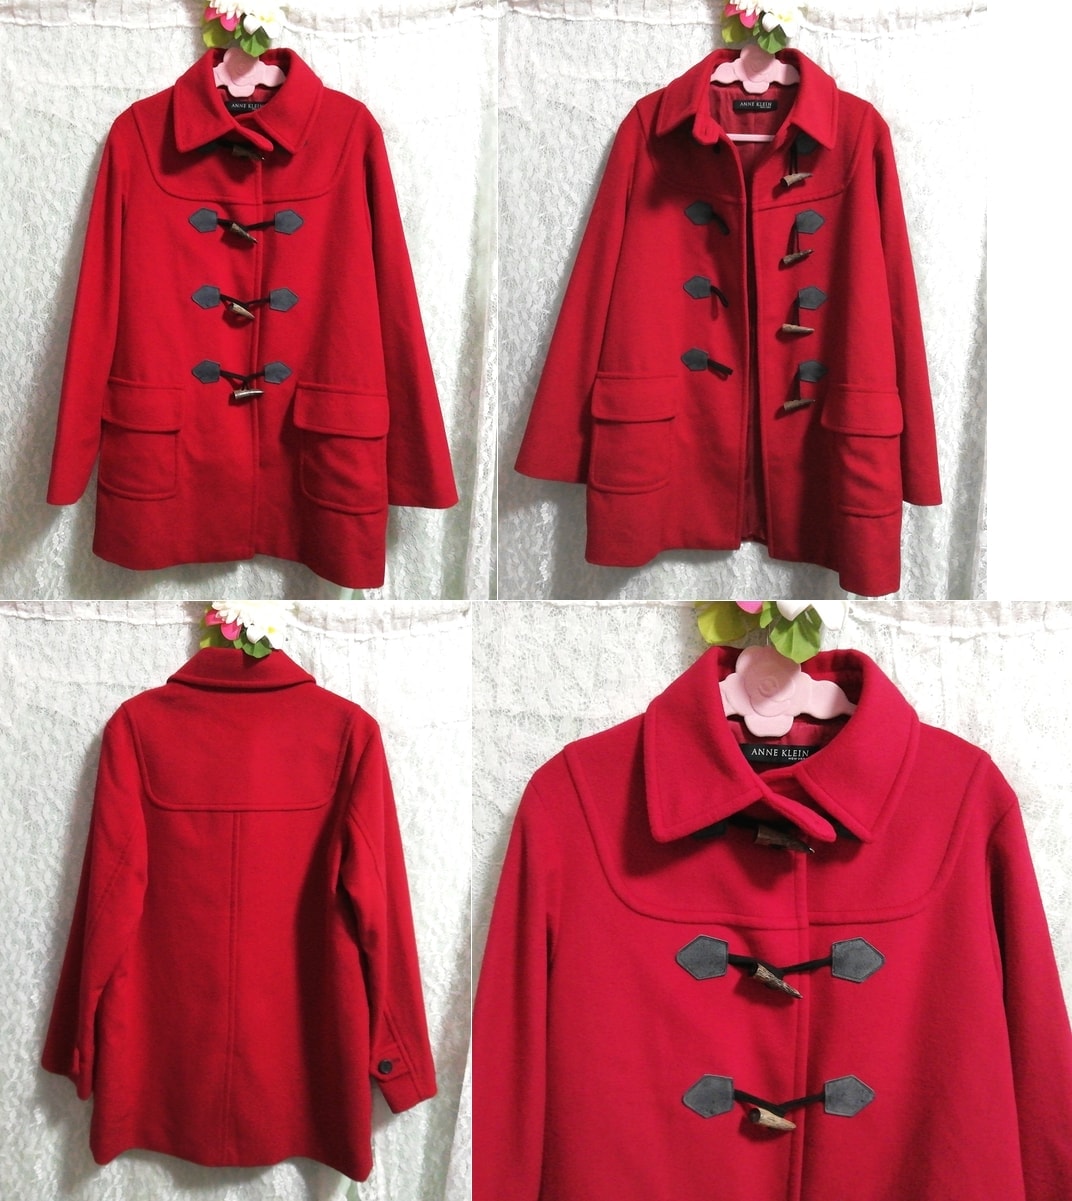 ANNE KLEIN NEW YORK 赤アンゴラ羊毛ダッフルコート外套 Red angora wool duffle coat cloak, コート, コート一般, Mサイズ